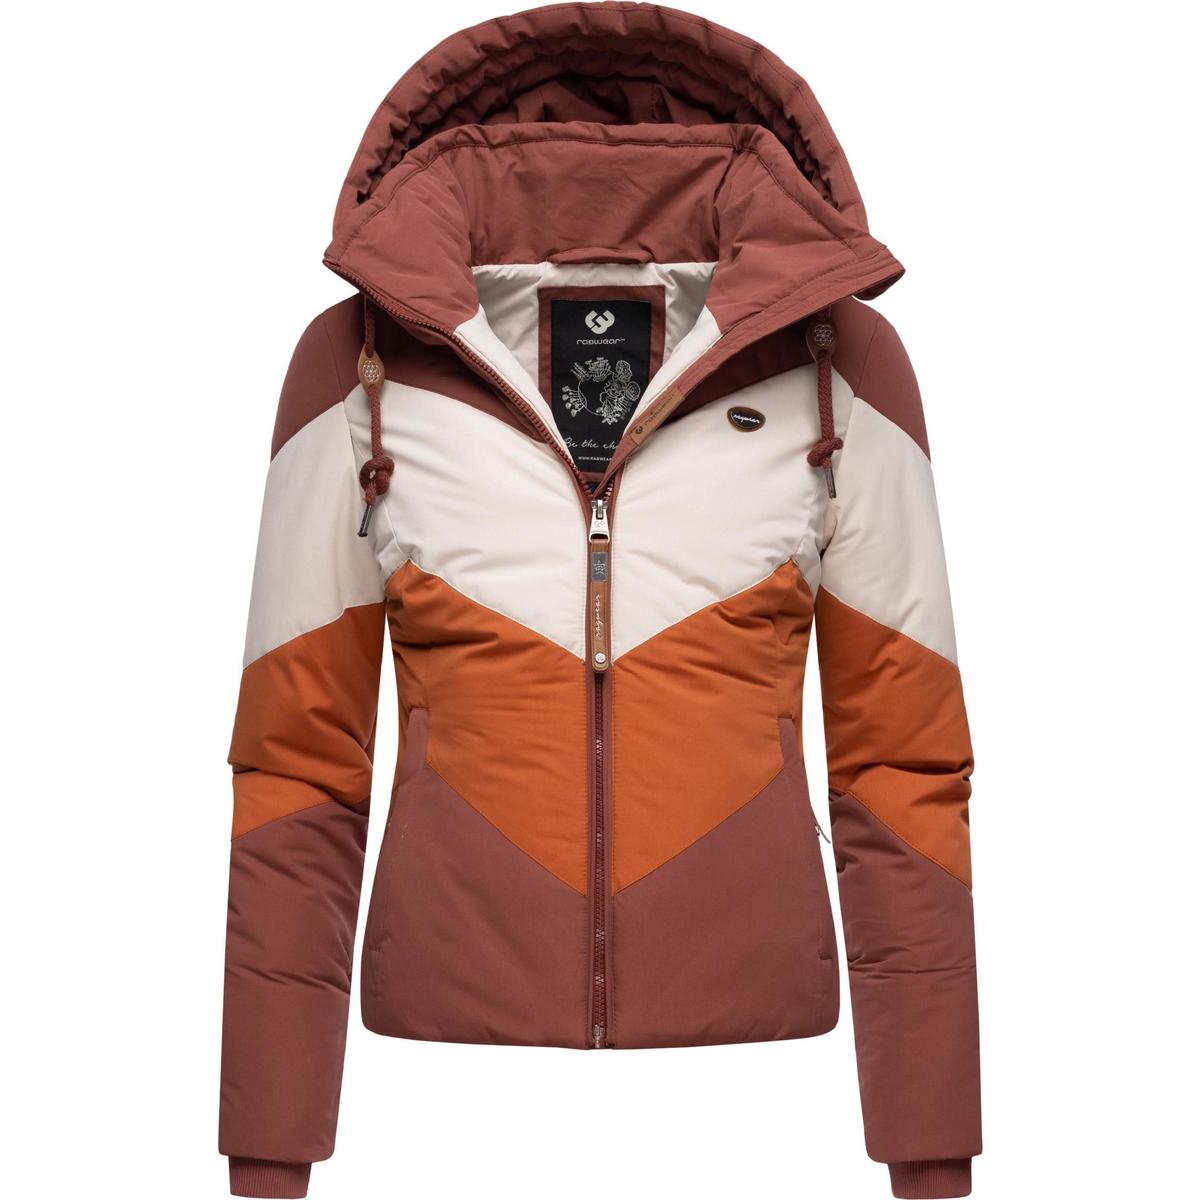 Ragwear Novva Braun Winterjacke Block Jacken 139,99 Kleidung Damen € -